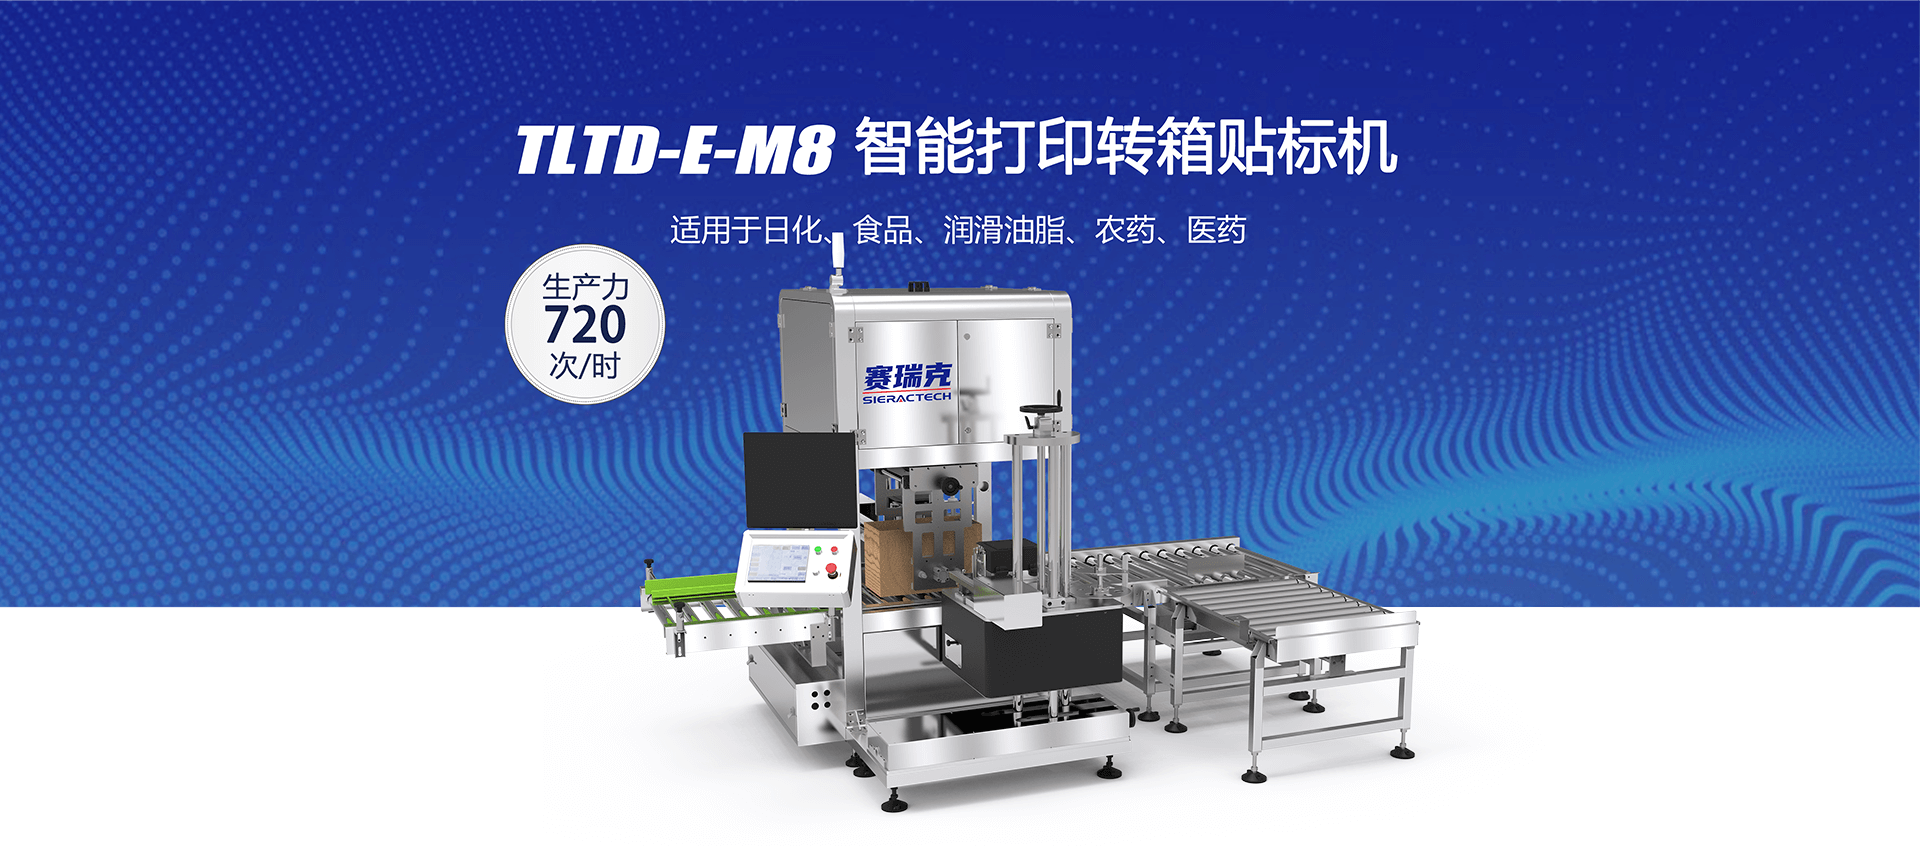 TLTD-E-M4智能打印转箱贴标机